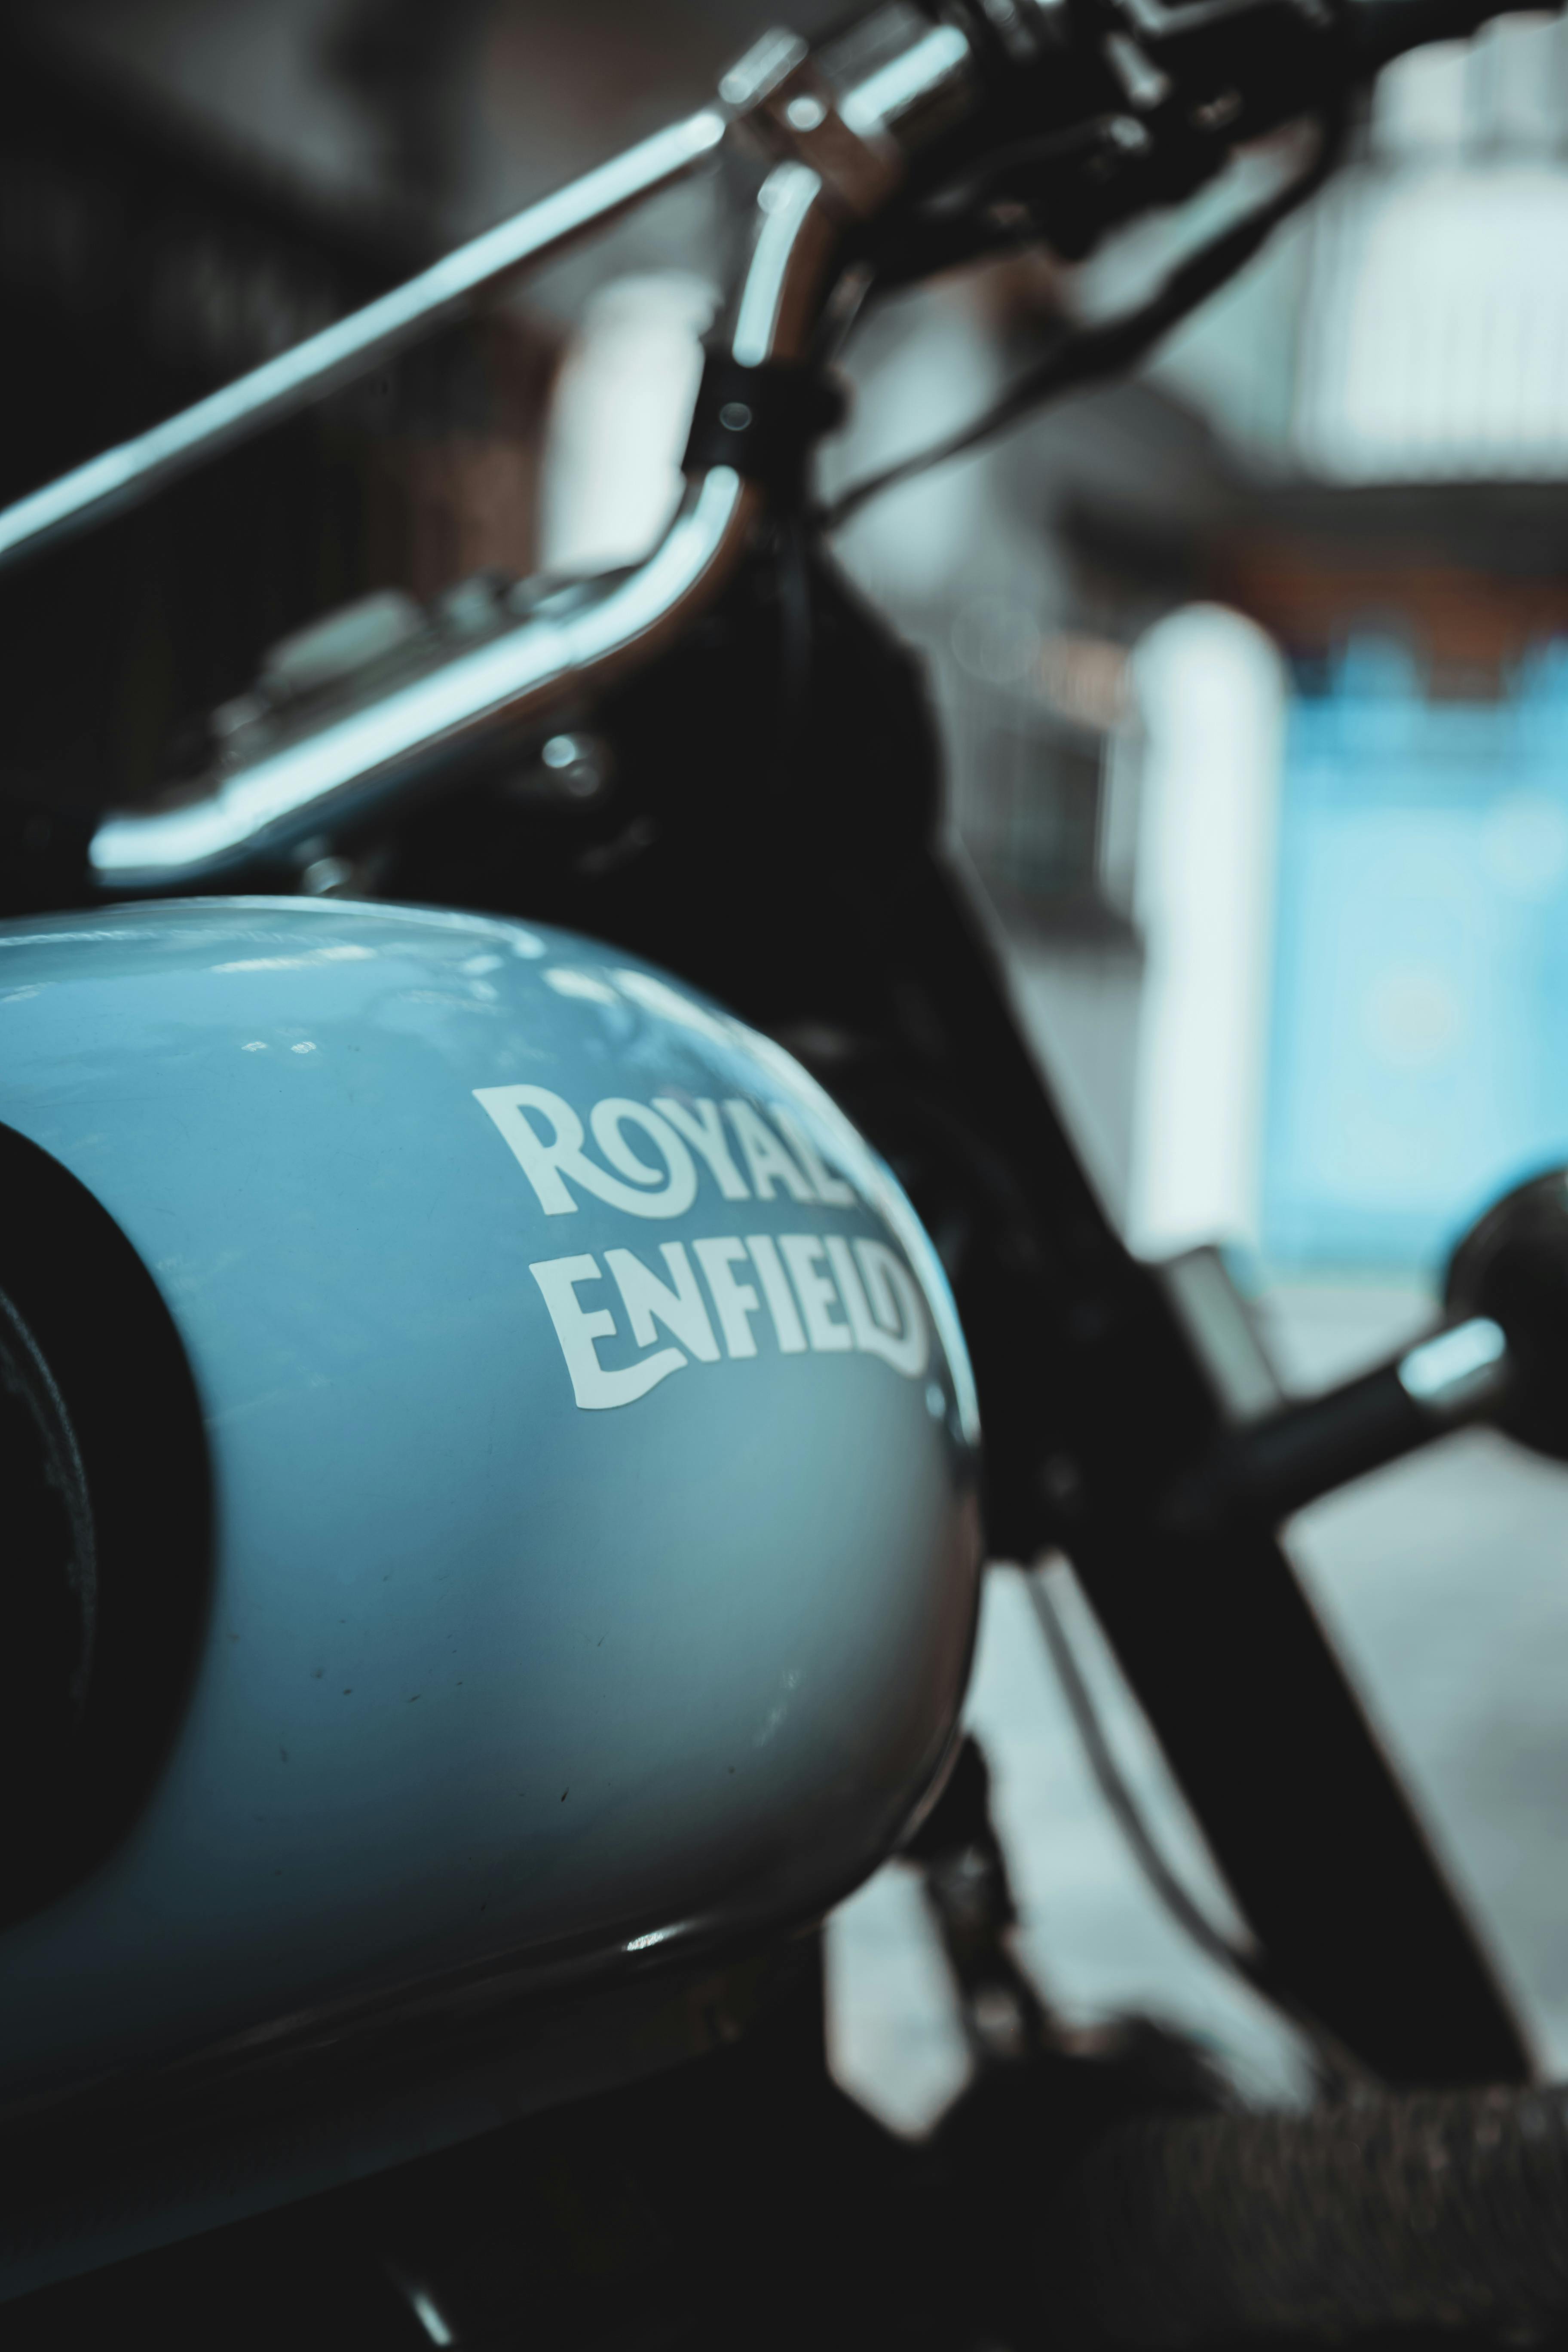 Best Royal Enfield Bullet Bike Wallpaper Pic Hwb26467  Royal Enfield Pic Hd   1024x533 Wallpaper  teahubio